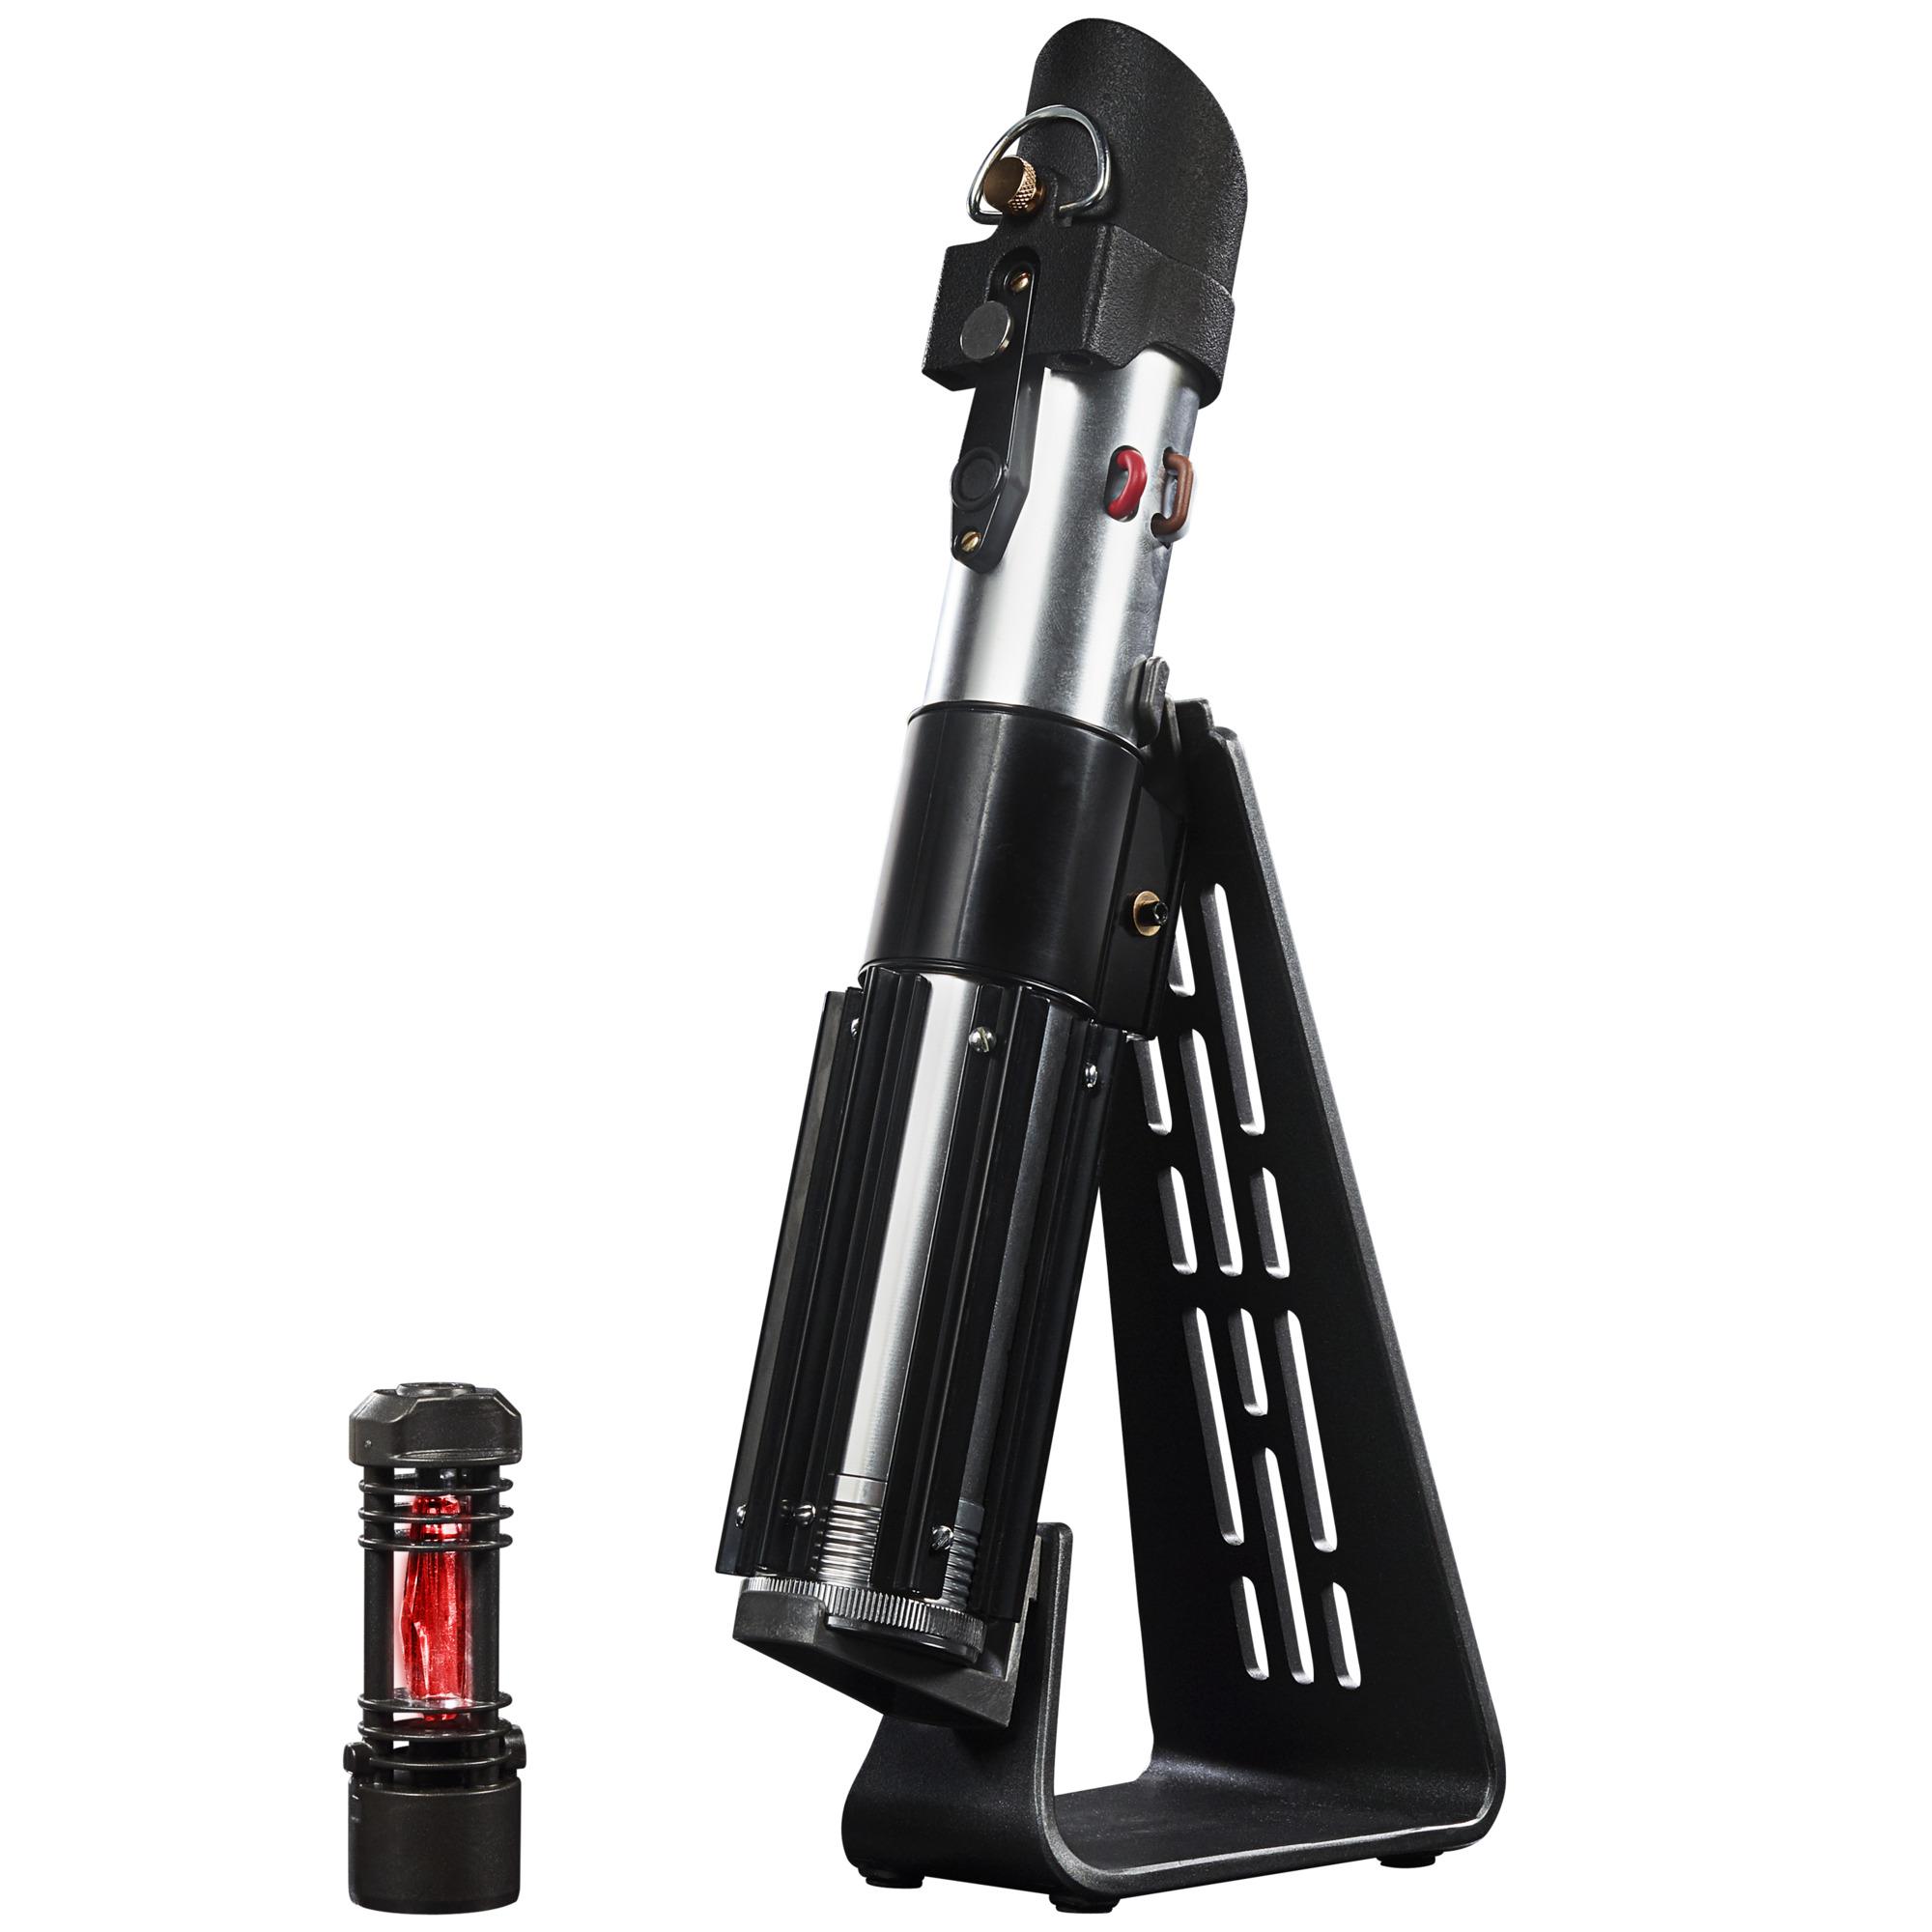 Visiter la boutique Star WarsStar Wars B3924 The Black Series Sabre laser Force FX de Darth Vador 